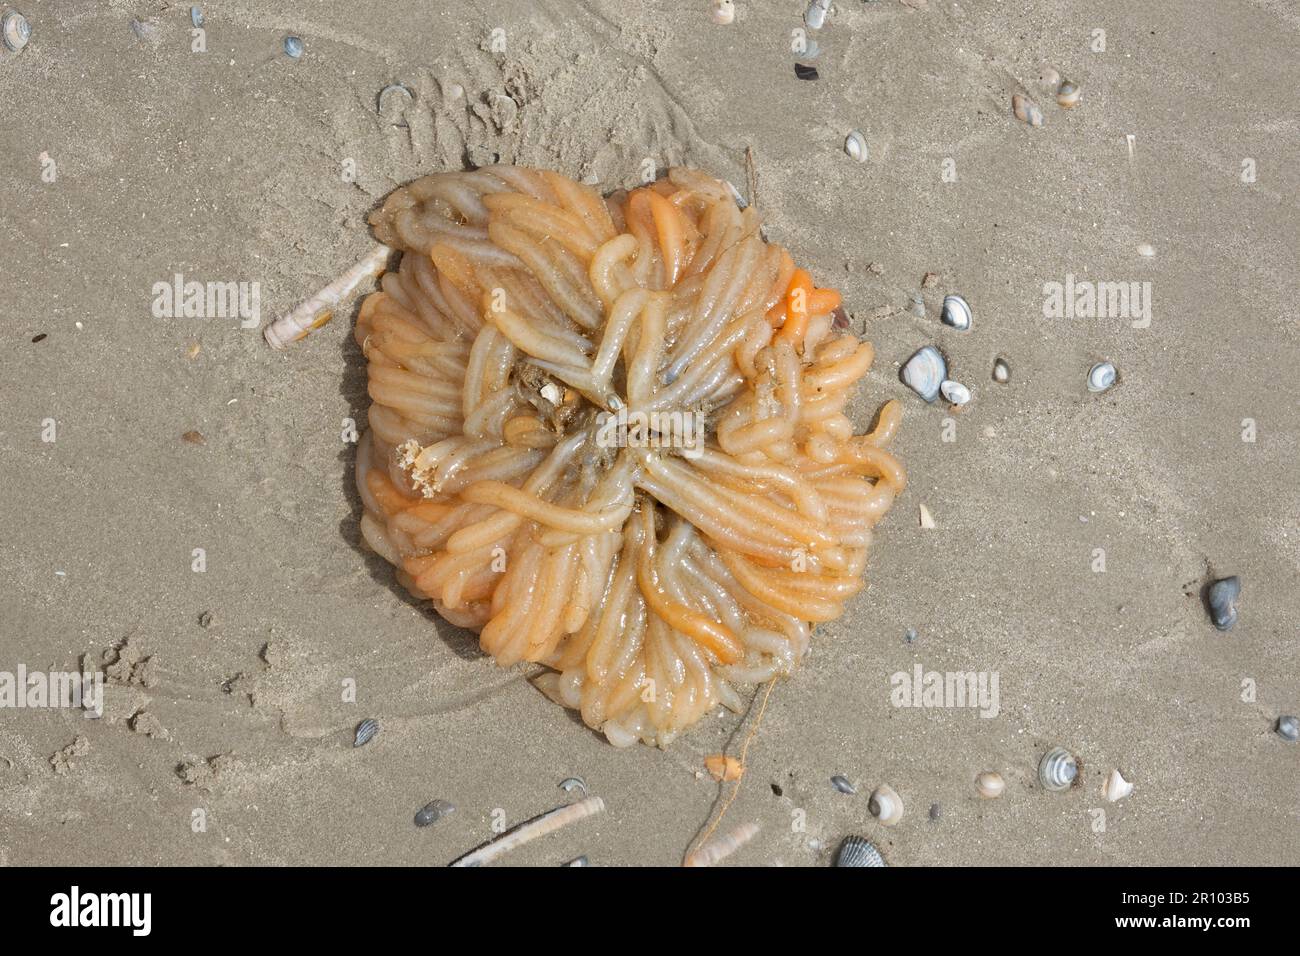 Mazzo di tube gelatinose contenenti uova di calamari eurpei, lavati in spiaggia Foto Stock